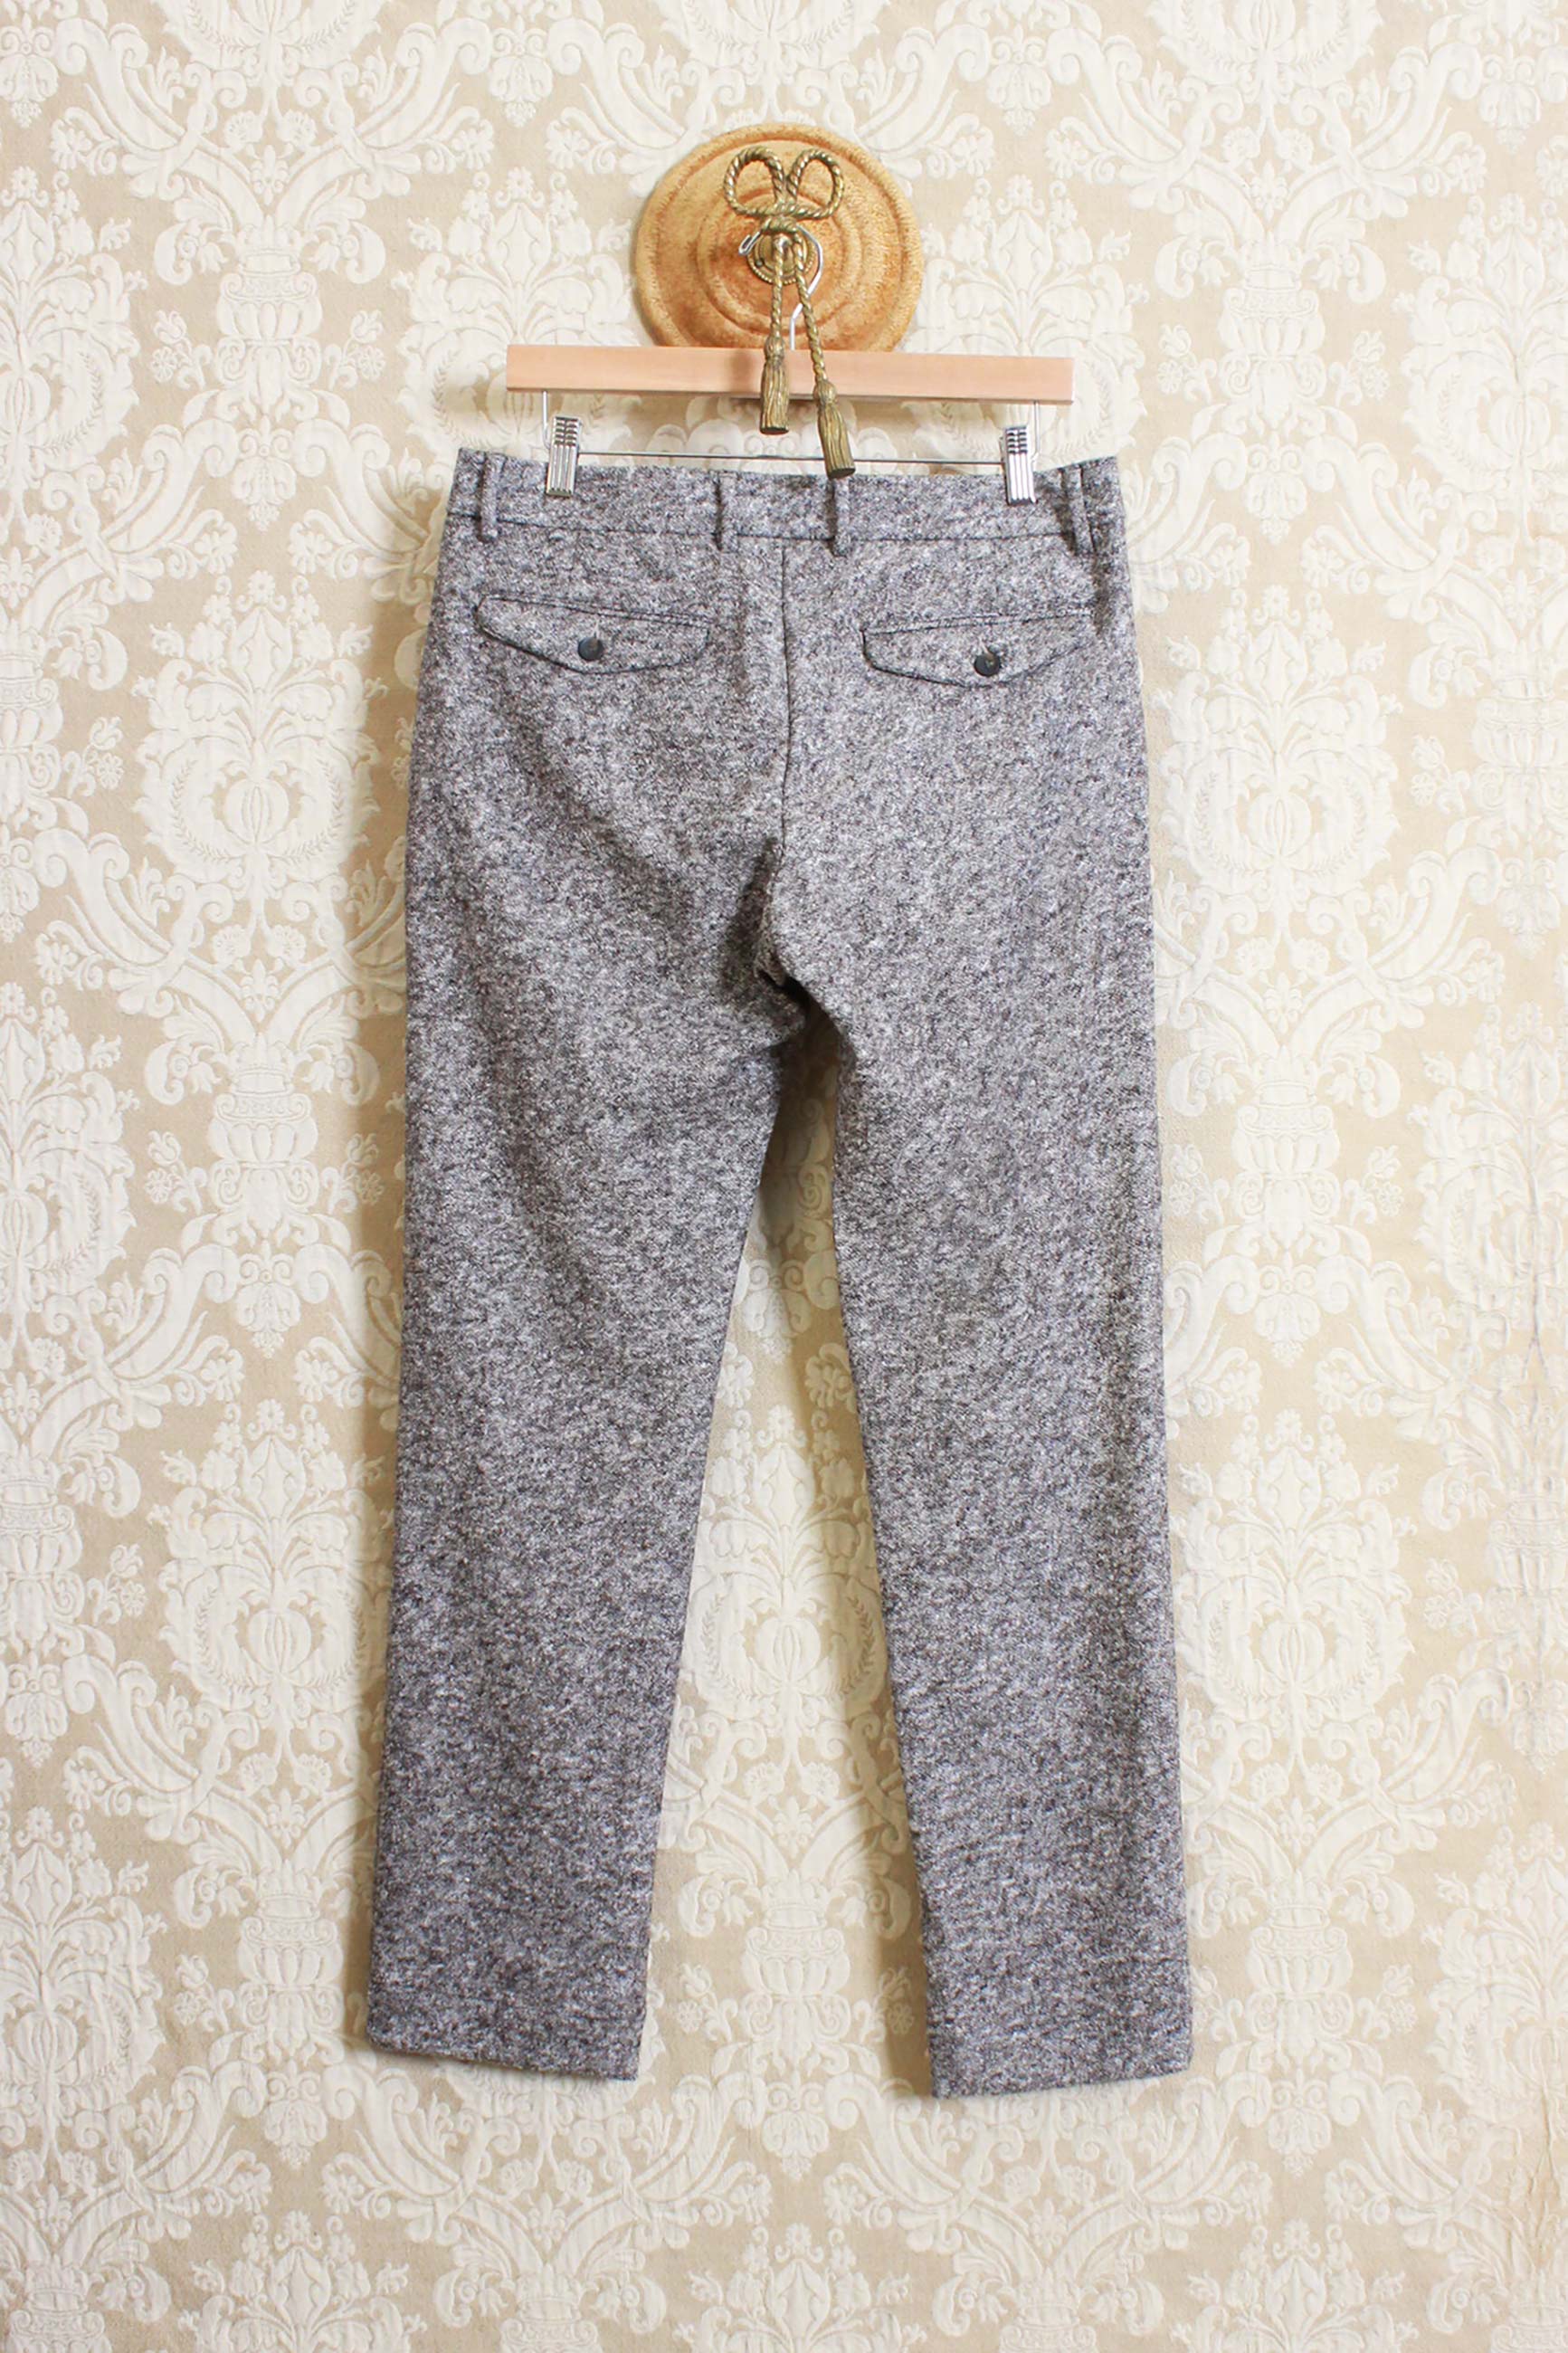 Pantalone original vintage style leisure fit da uomo soft wool visone grey